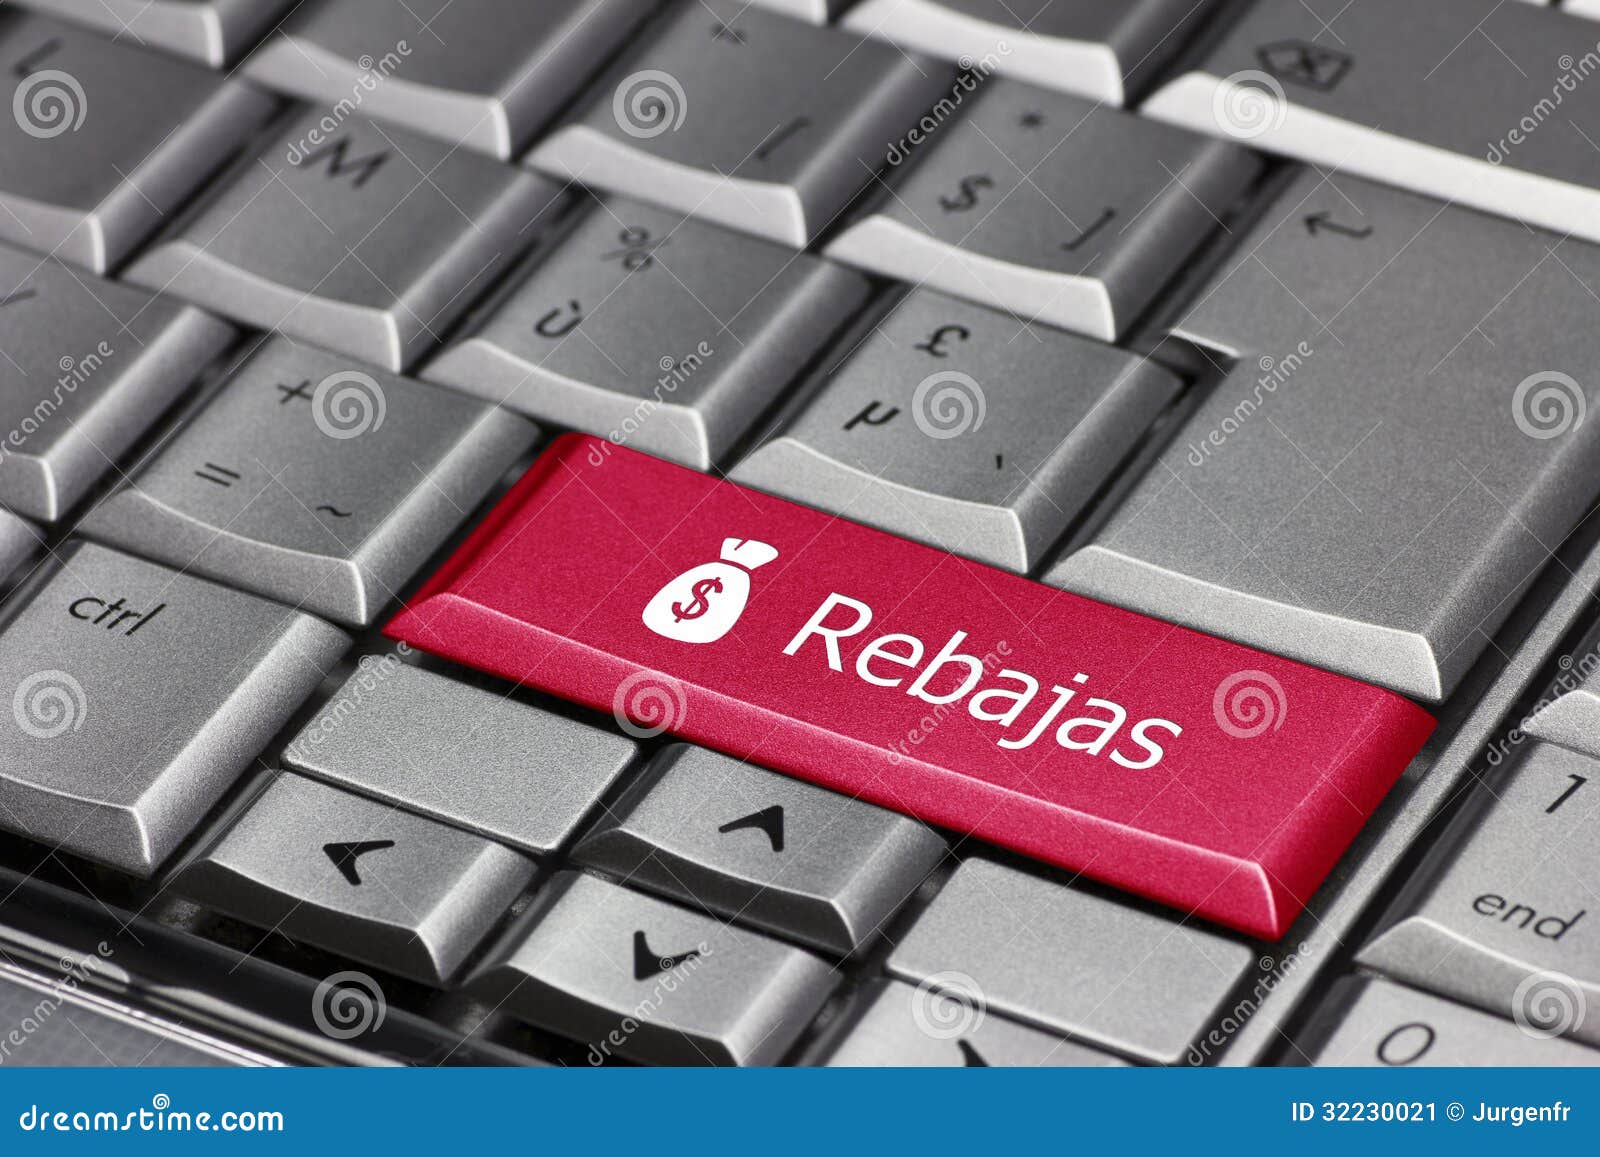 the word rebajas on a computer key